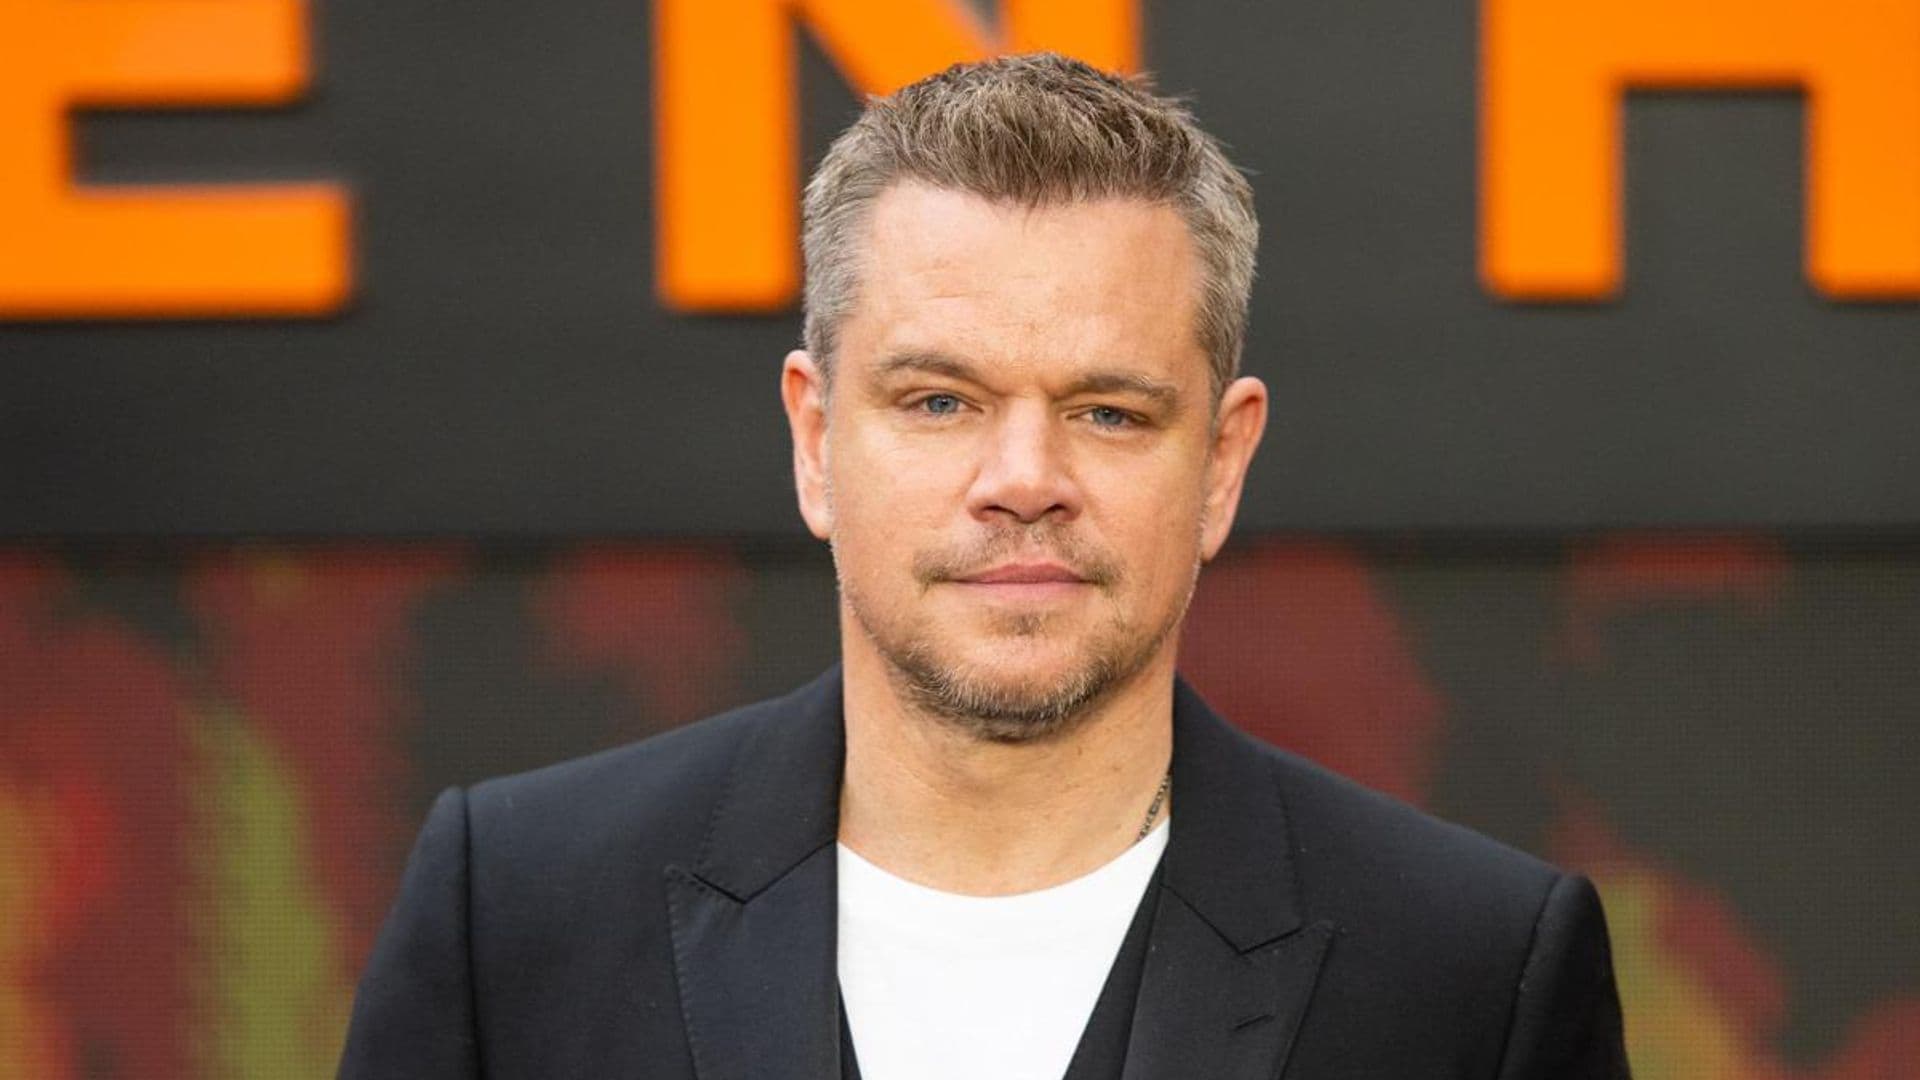 Matt Damon negotiated with wife Luciana Barroso his ‘Oppenheimer’ role